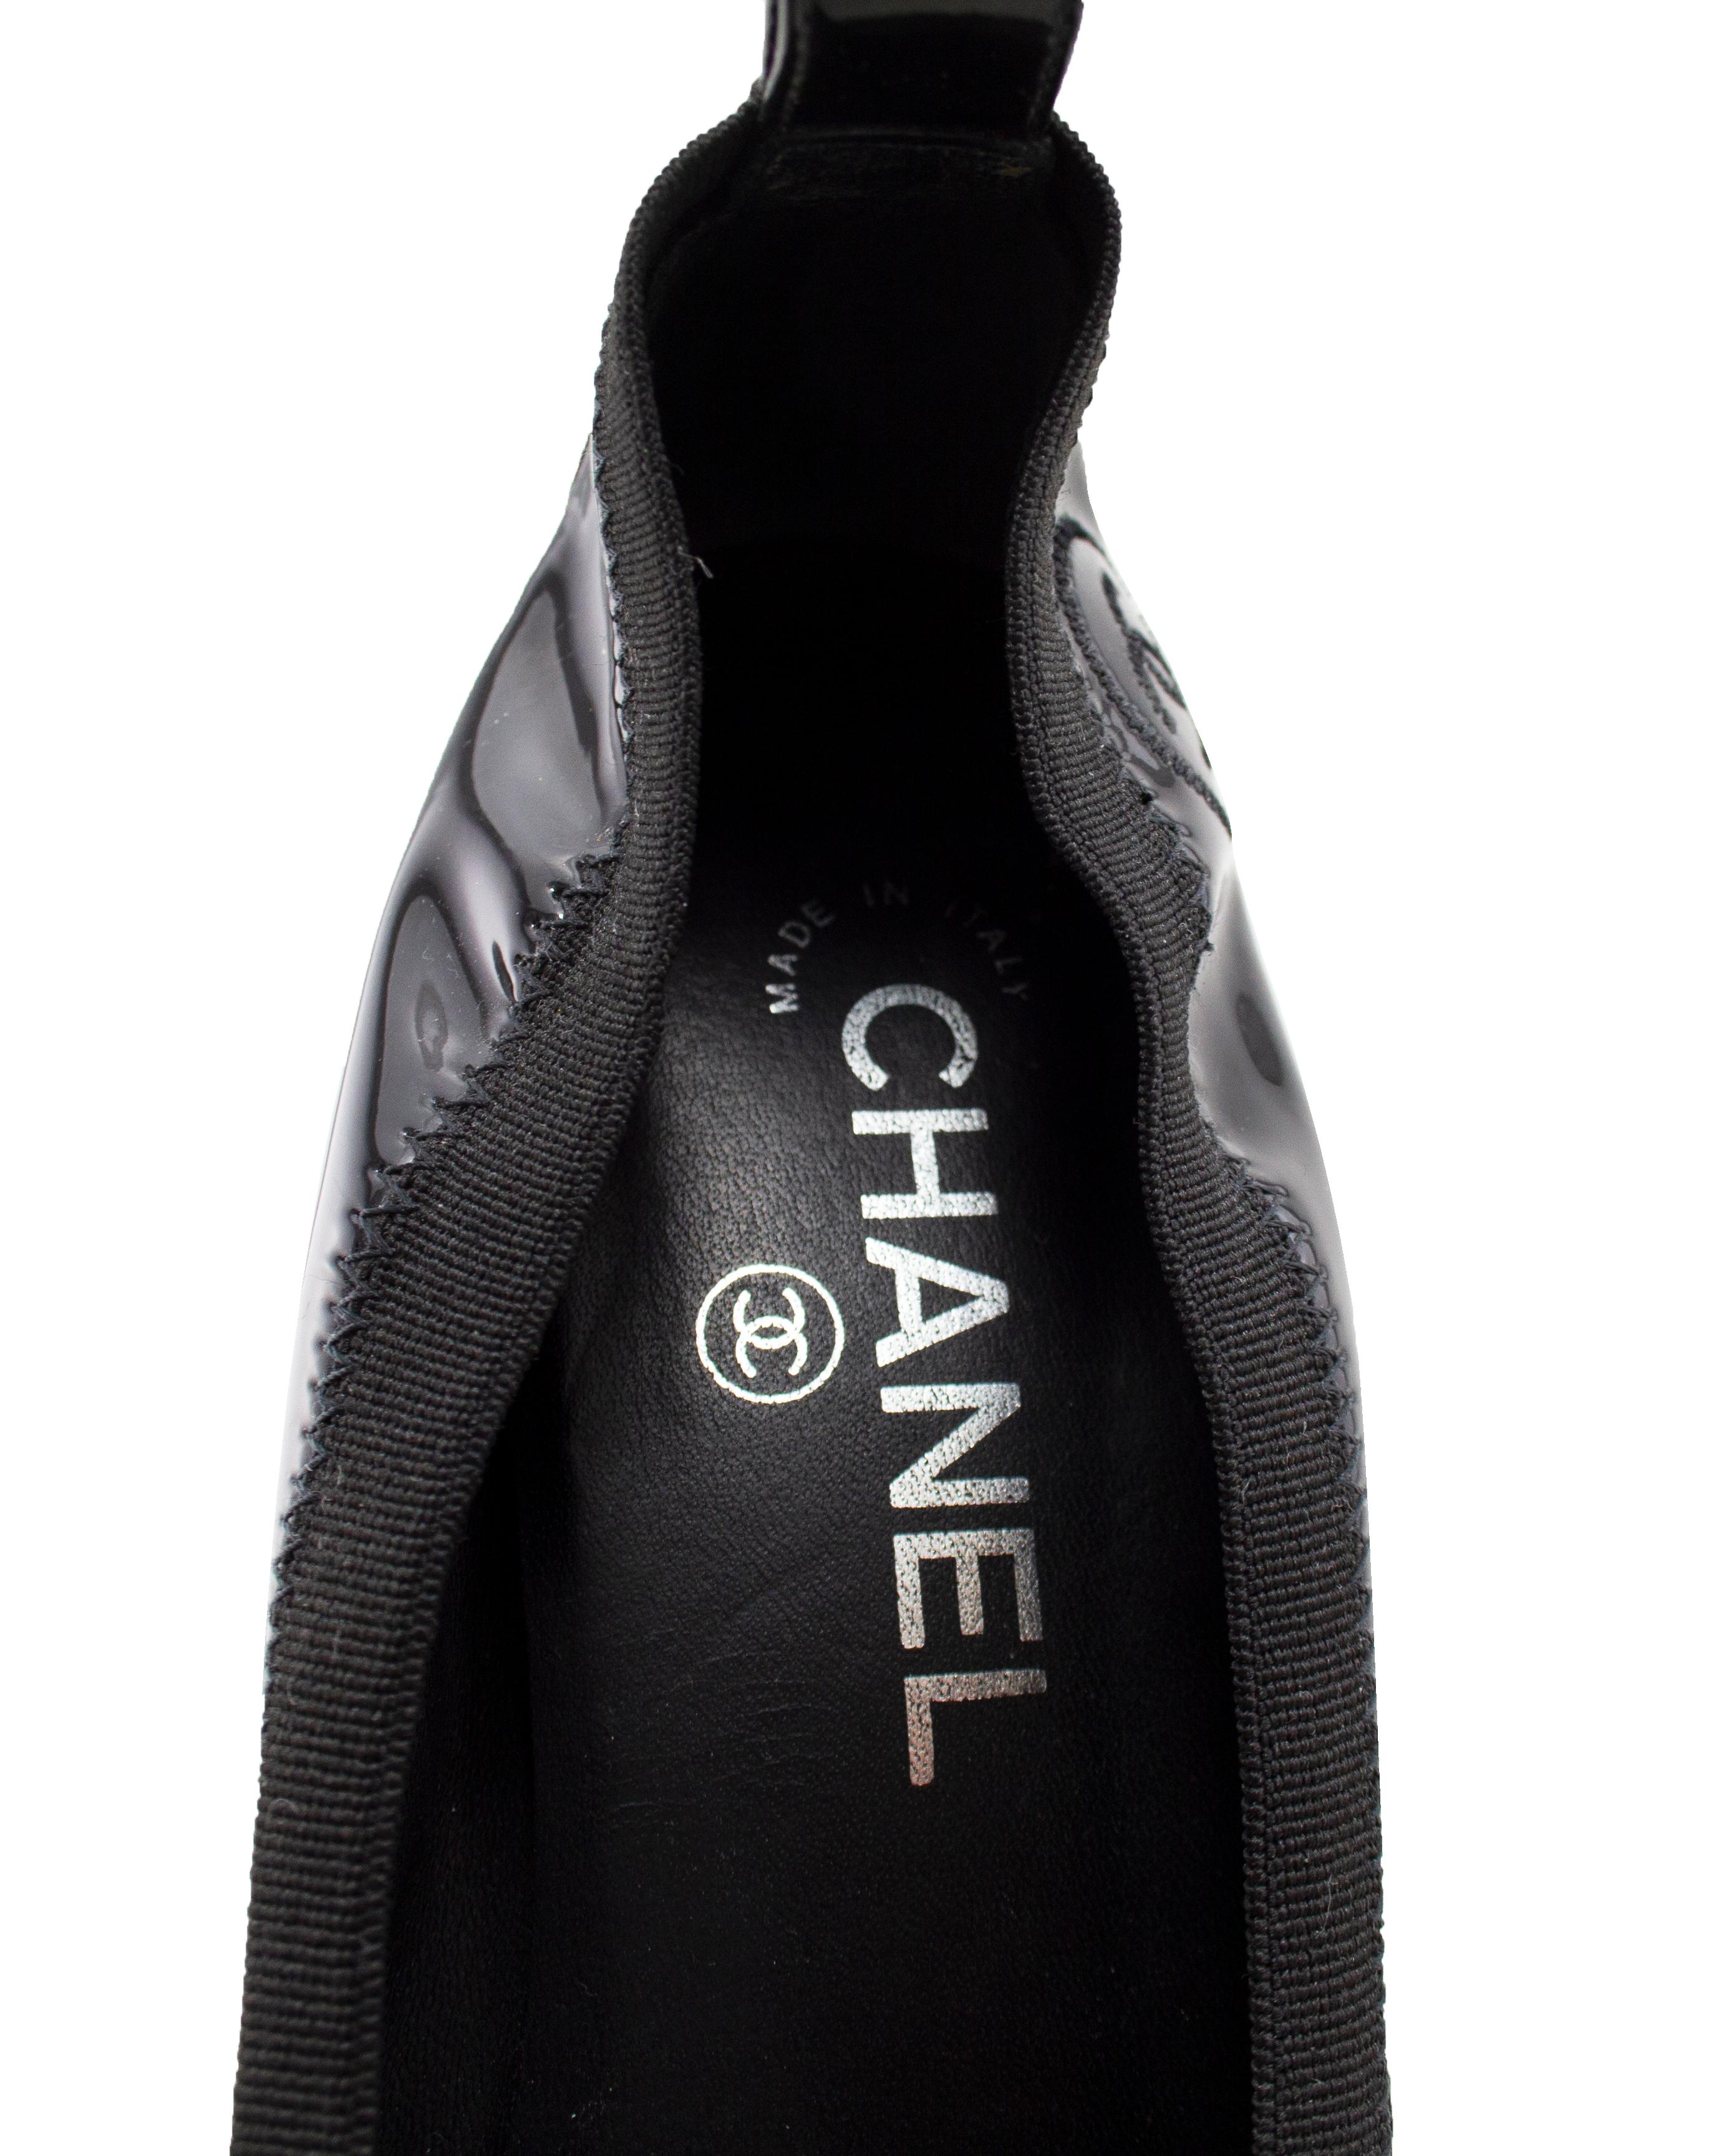 Mid 2000s Chanel Black Patent Leather Pumps 2